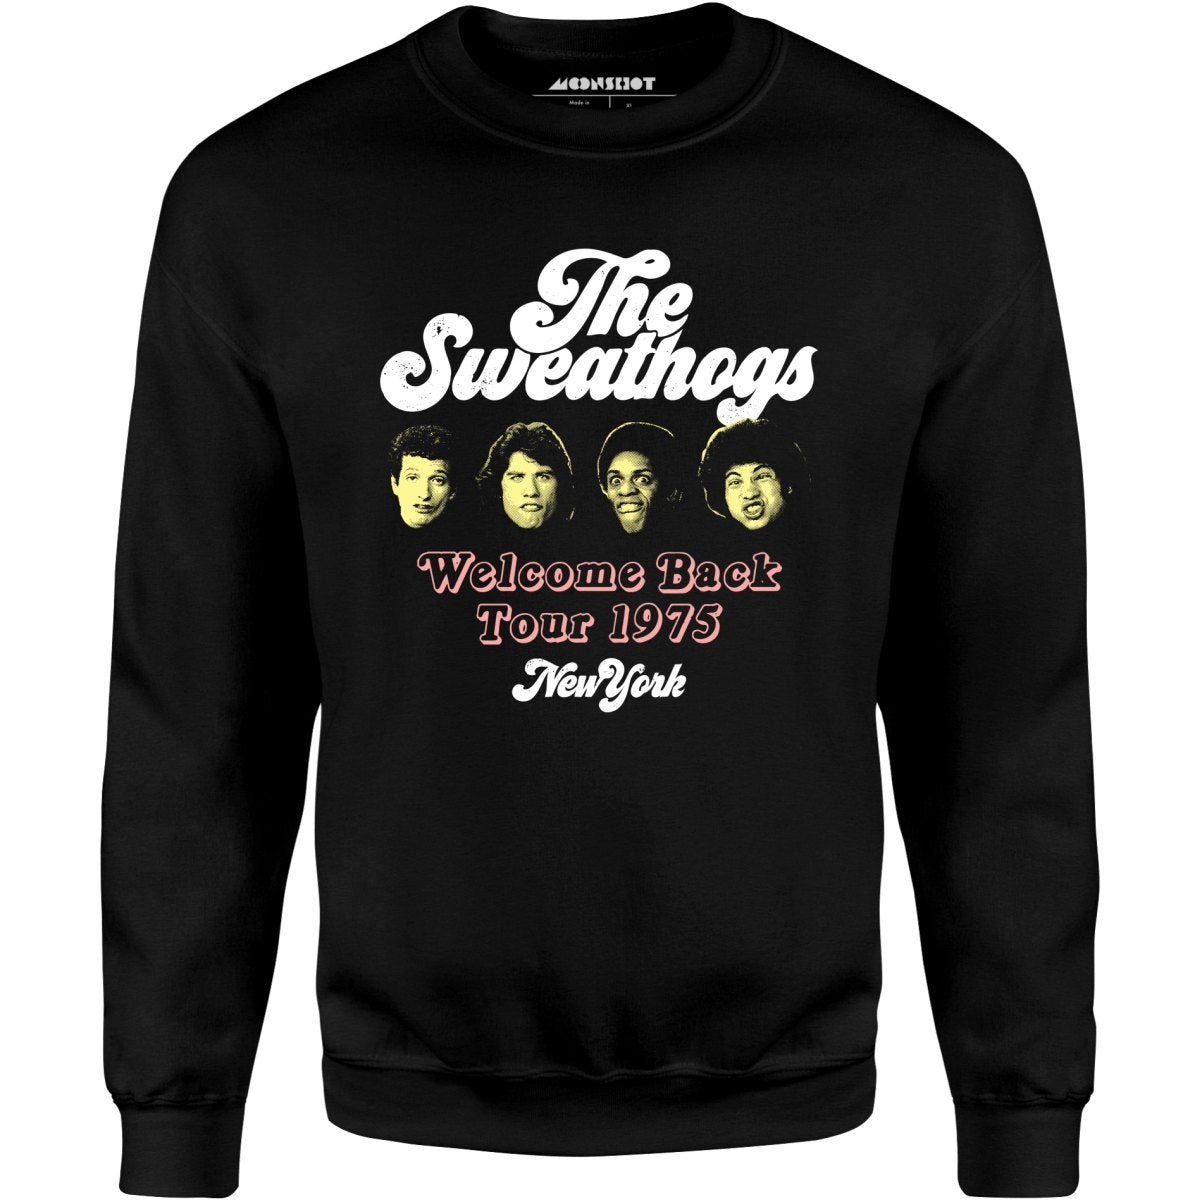 The Sweathogs - Unisex Sweatshirt